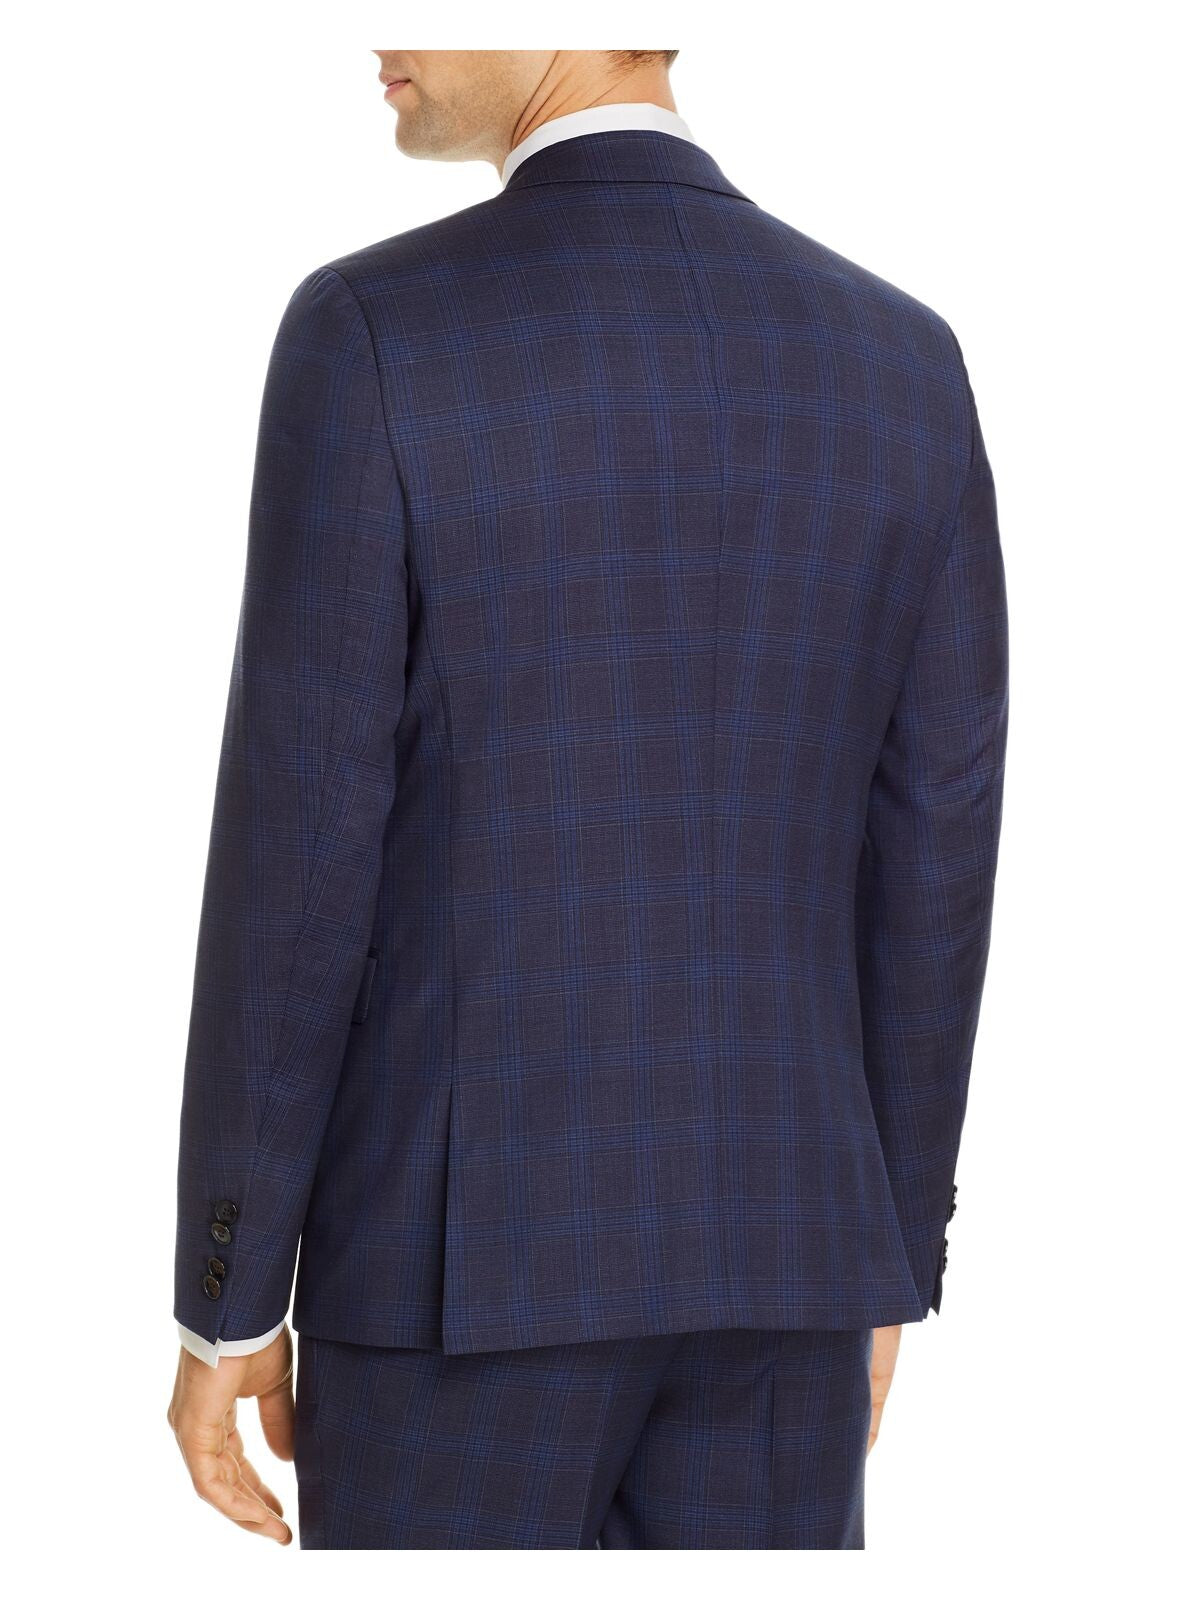 HUGO BOSS Mens Navy Check Extra Slim Fit Suit Separate Blazer Jacket 40R